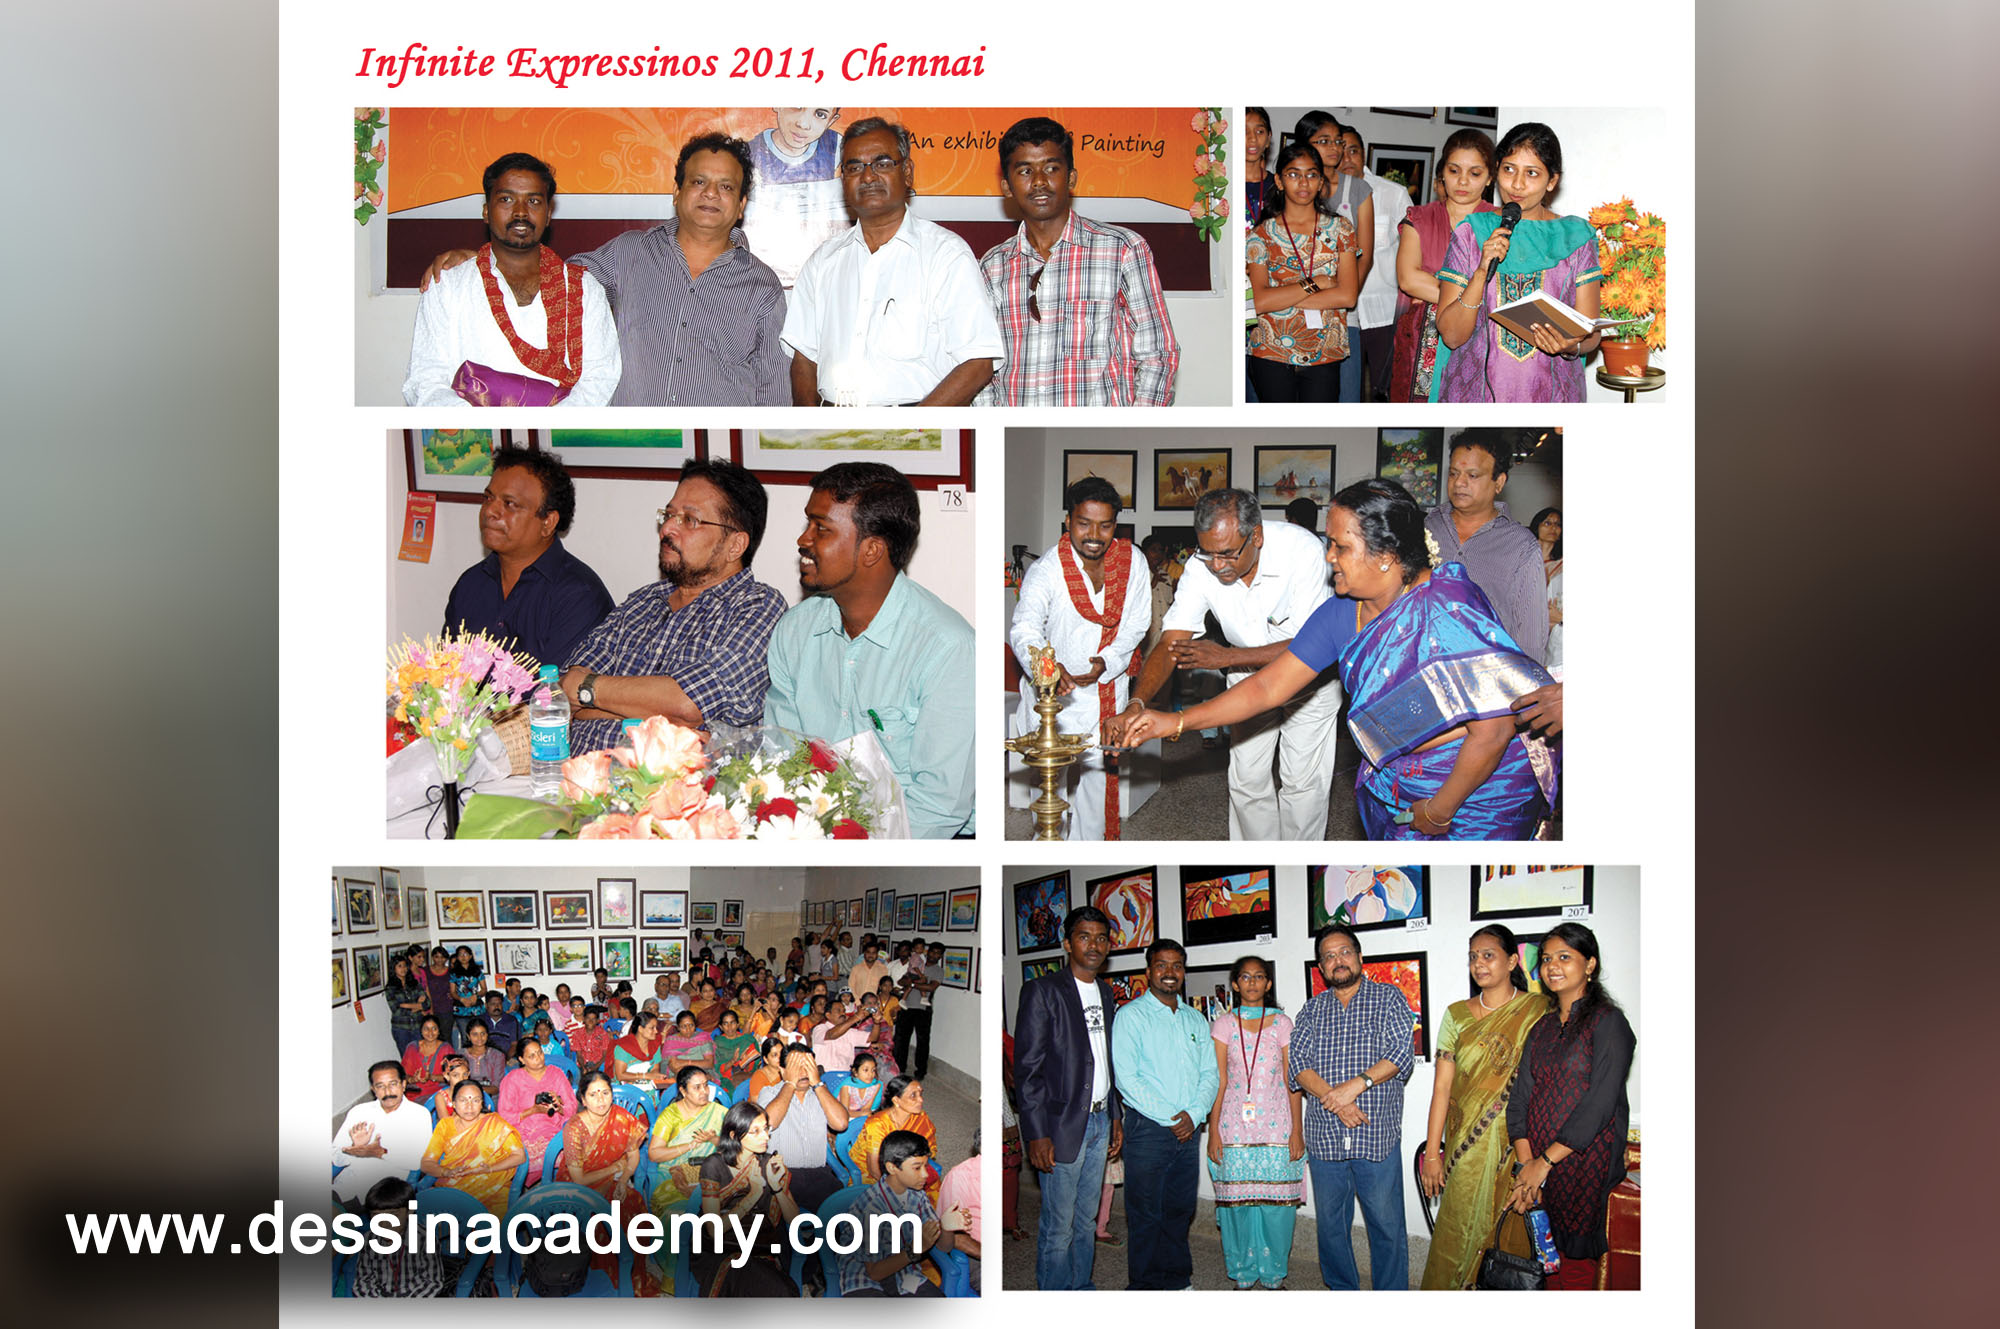 Dessin School of arts Event Gallery 5, sketching classes For Kids in Anna Nagar East L BlockDessin School of Arts